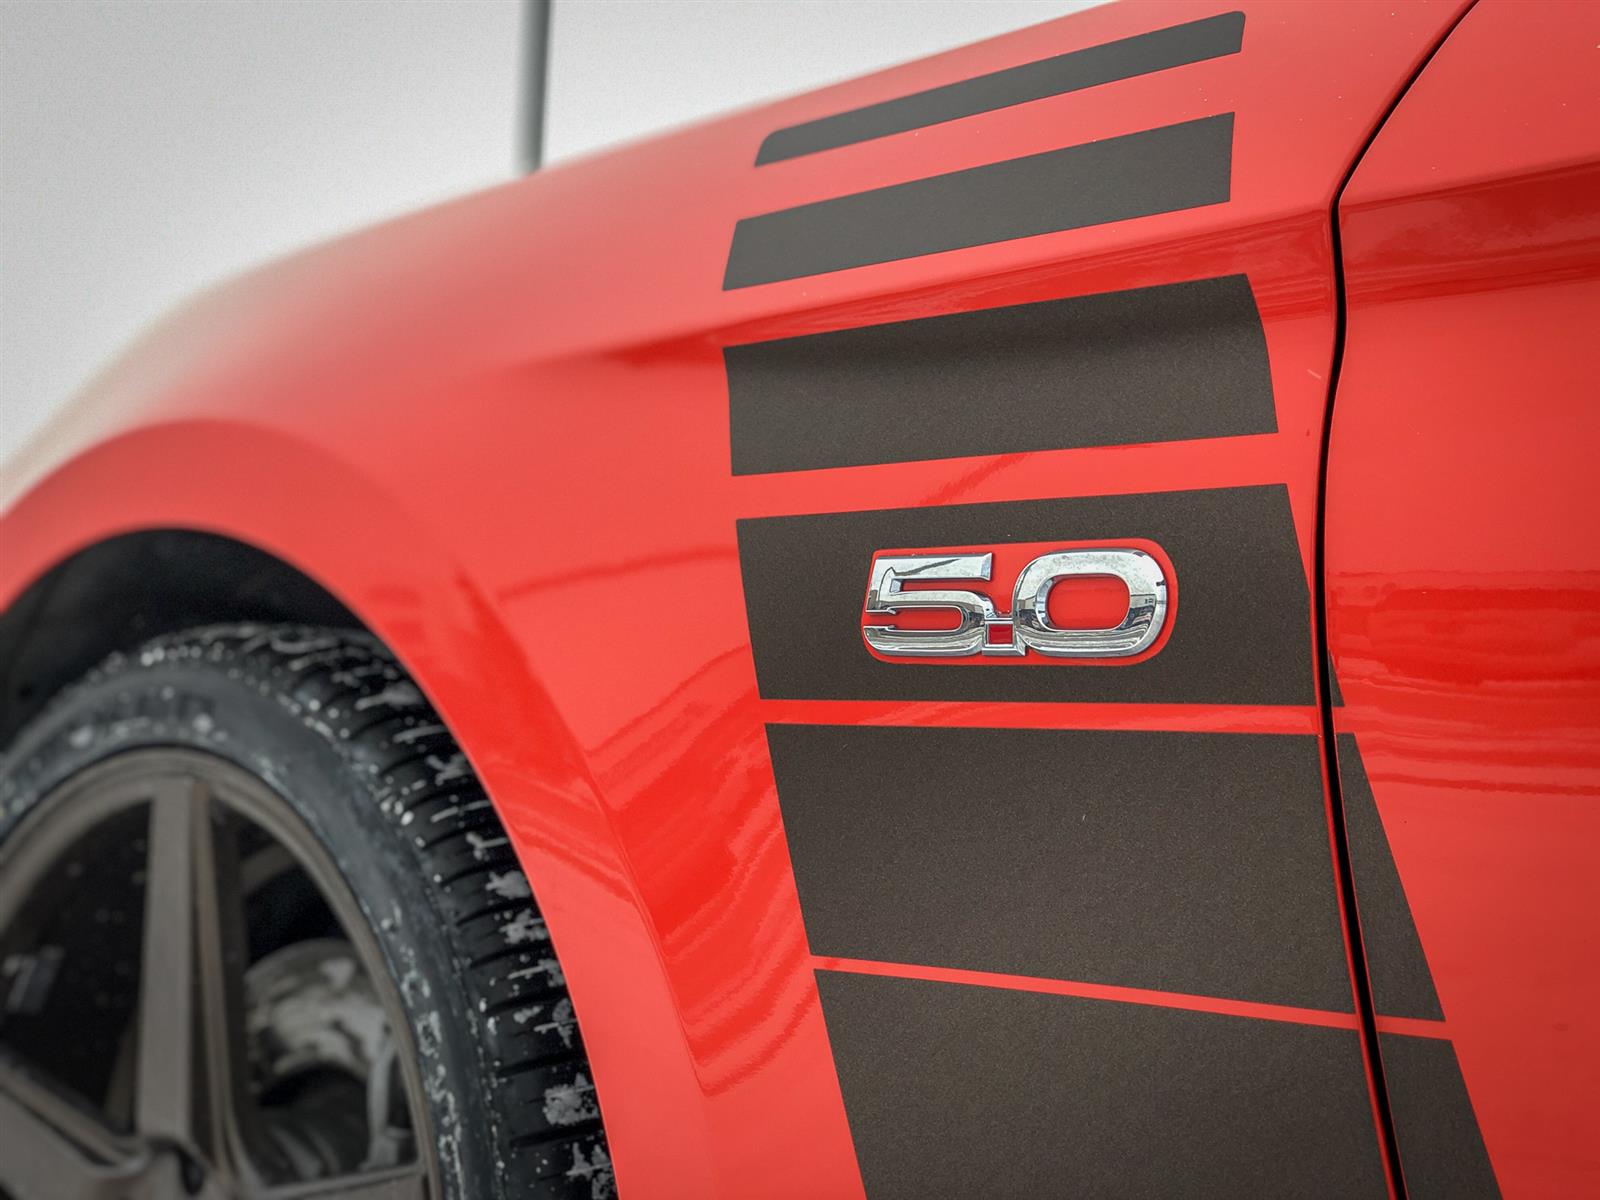 2016 Ford Mustang GT | 5.0L V8 | MANUAL | REVERSE CAMERA | ROUSH INTAKE + EXHAUST